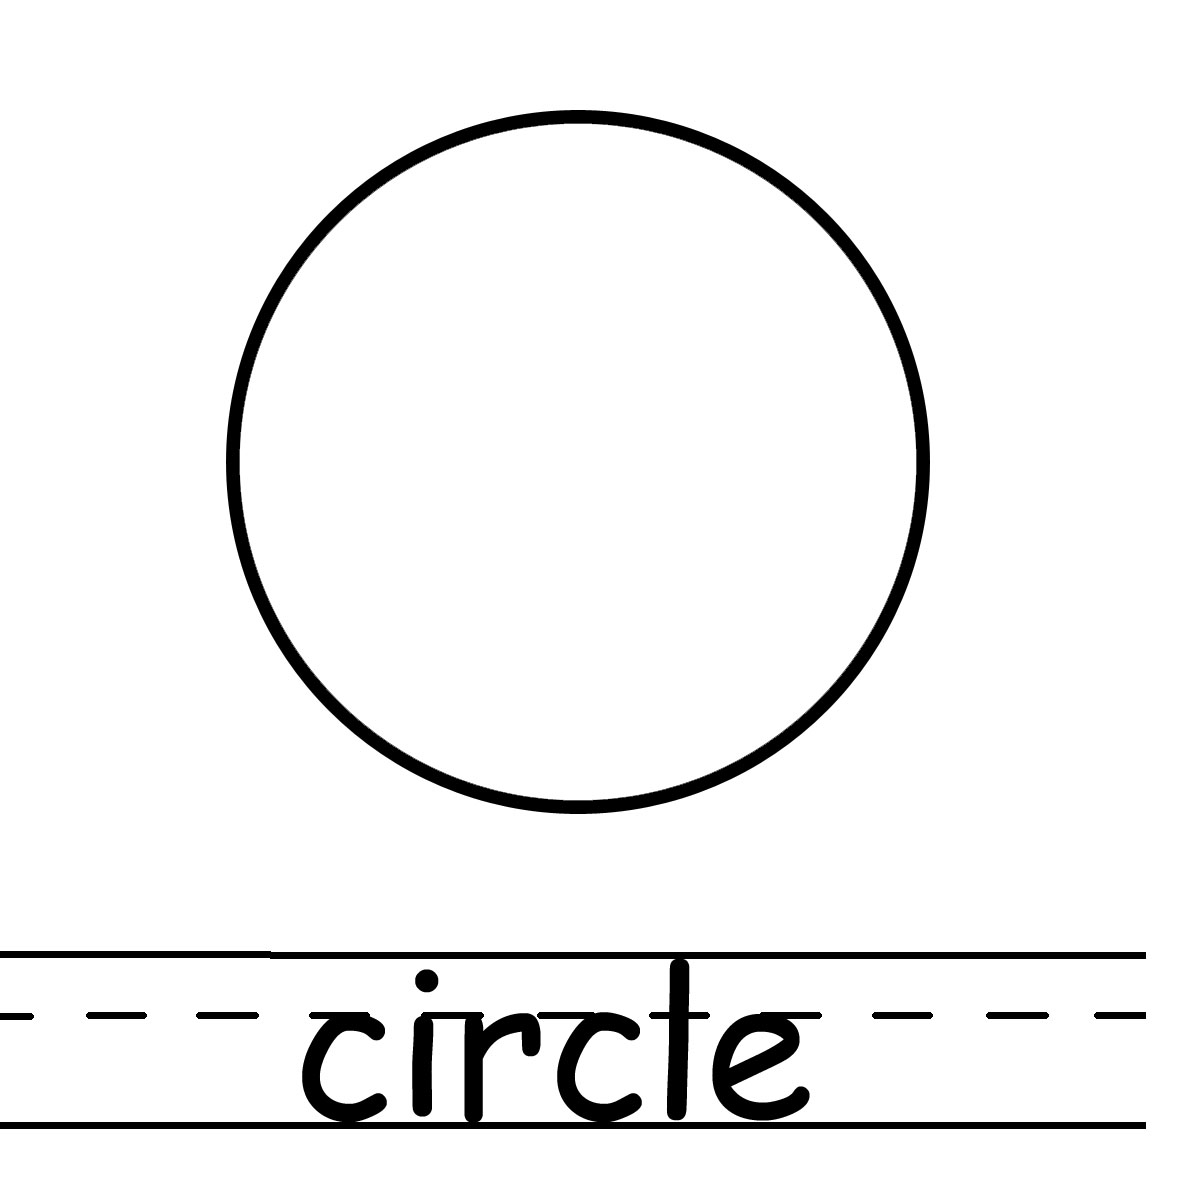 circle coloring page clip art shapes square geometry color abcteach circle coloring page 